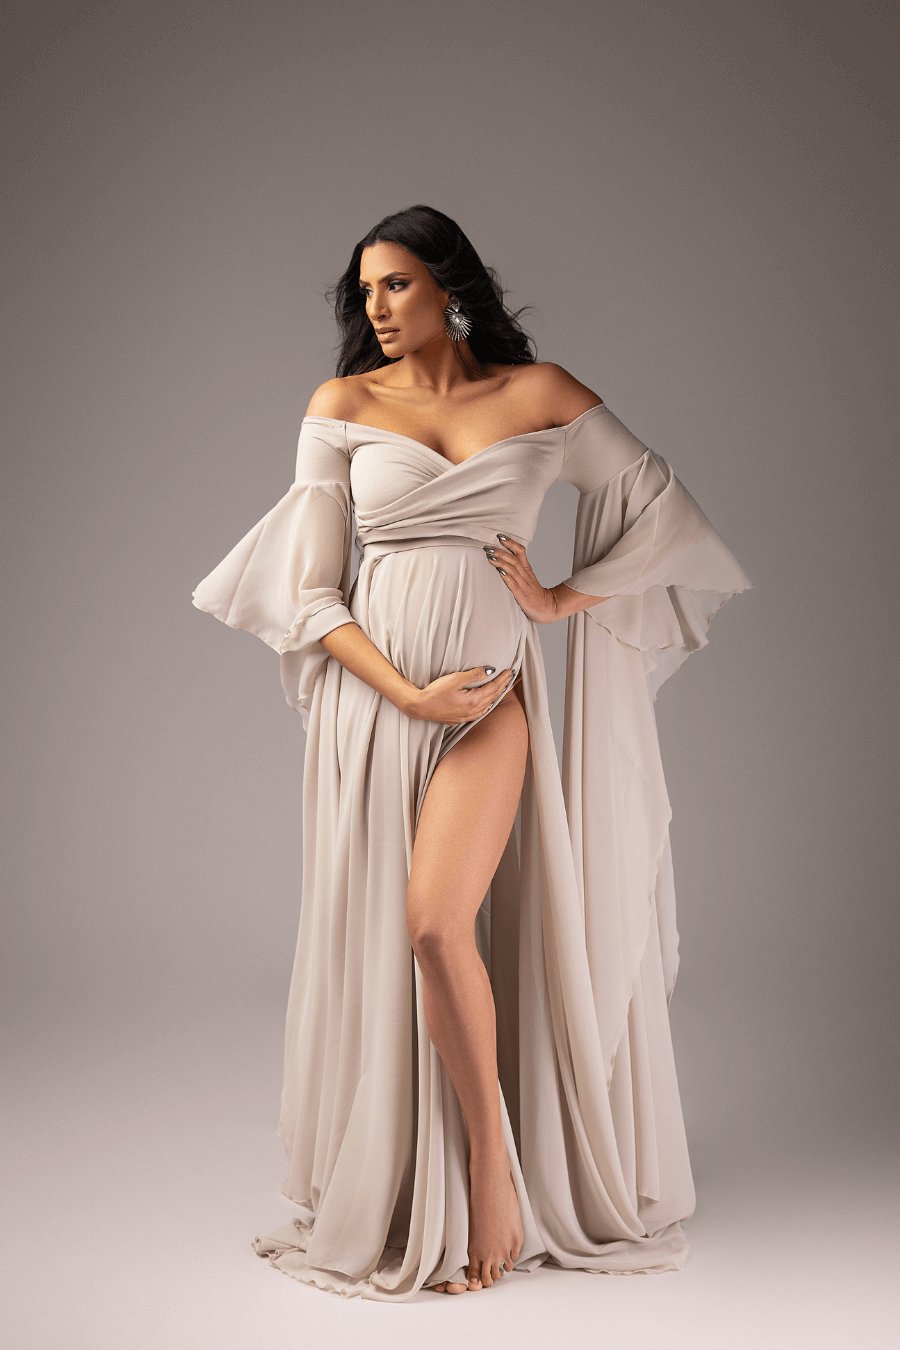 Calabria Set - Maternity photoshoot dress - Mii-Estilo